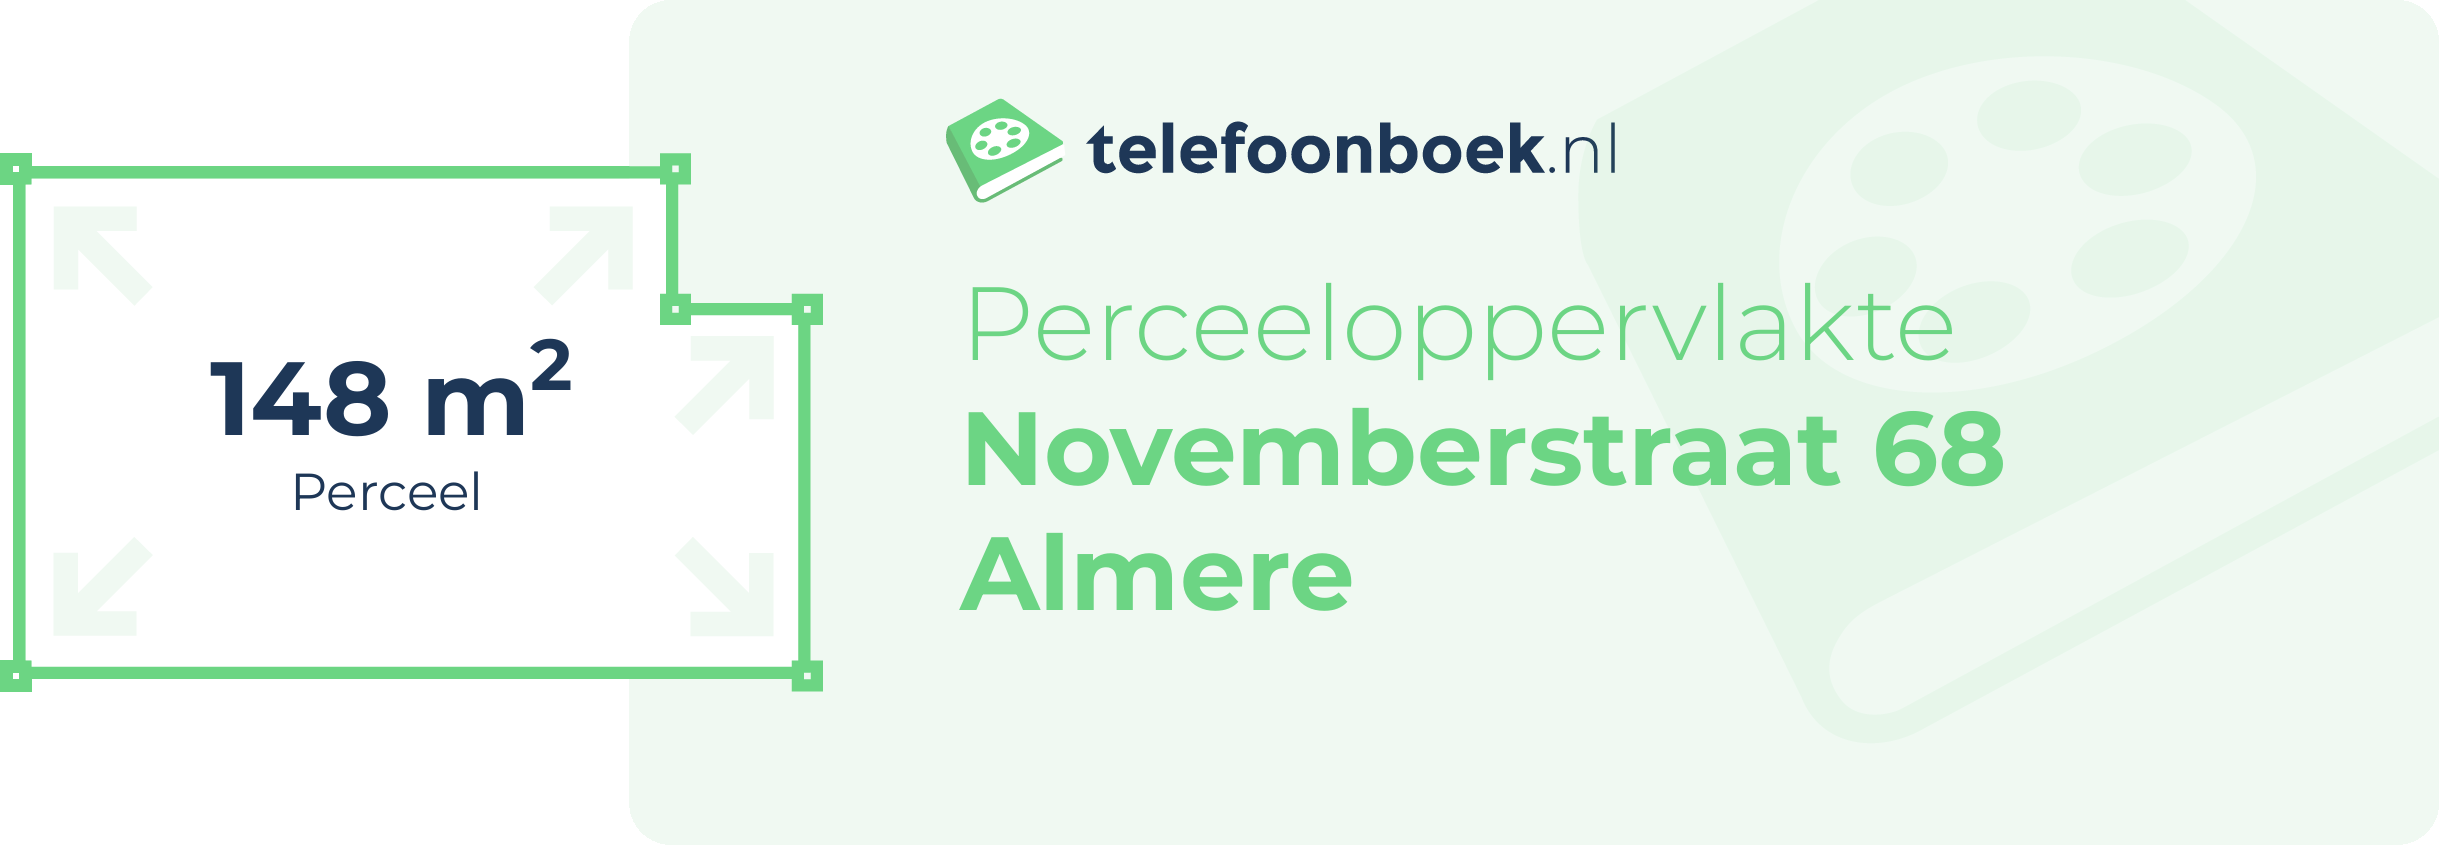 Perceeloppervlakte Novemberstraat 68 Almere